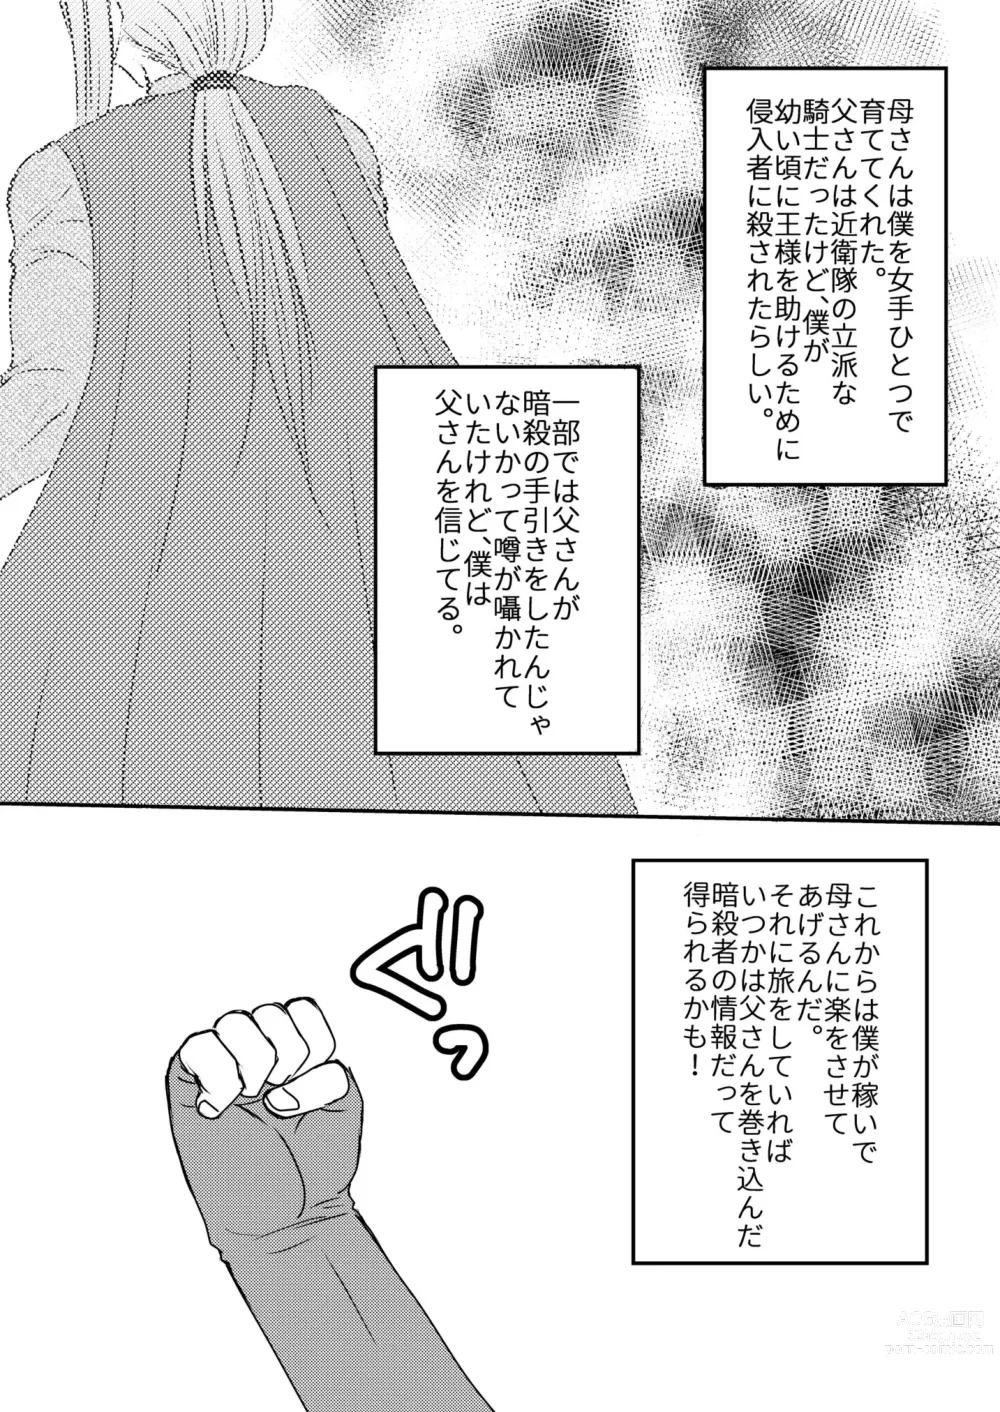 Page 5 of doujinshi Hajimete no Boukenki